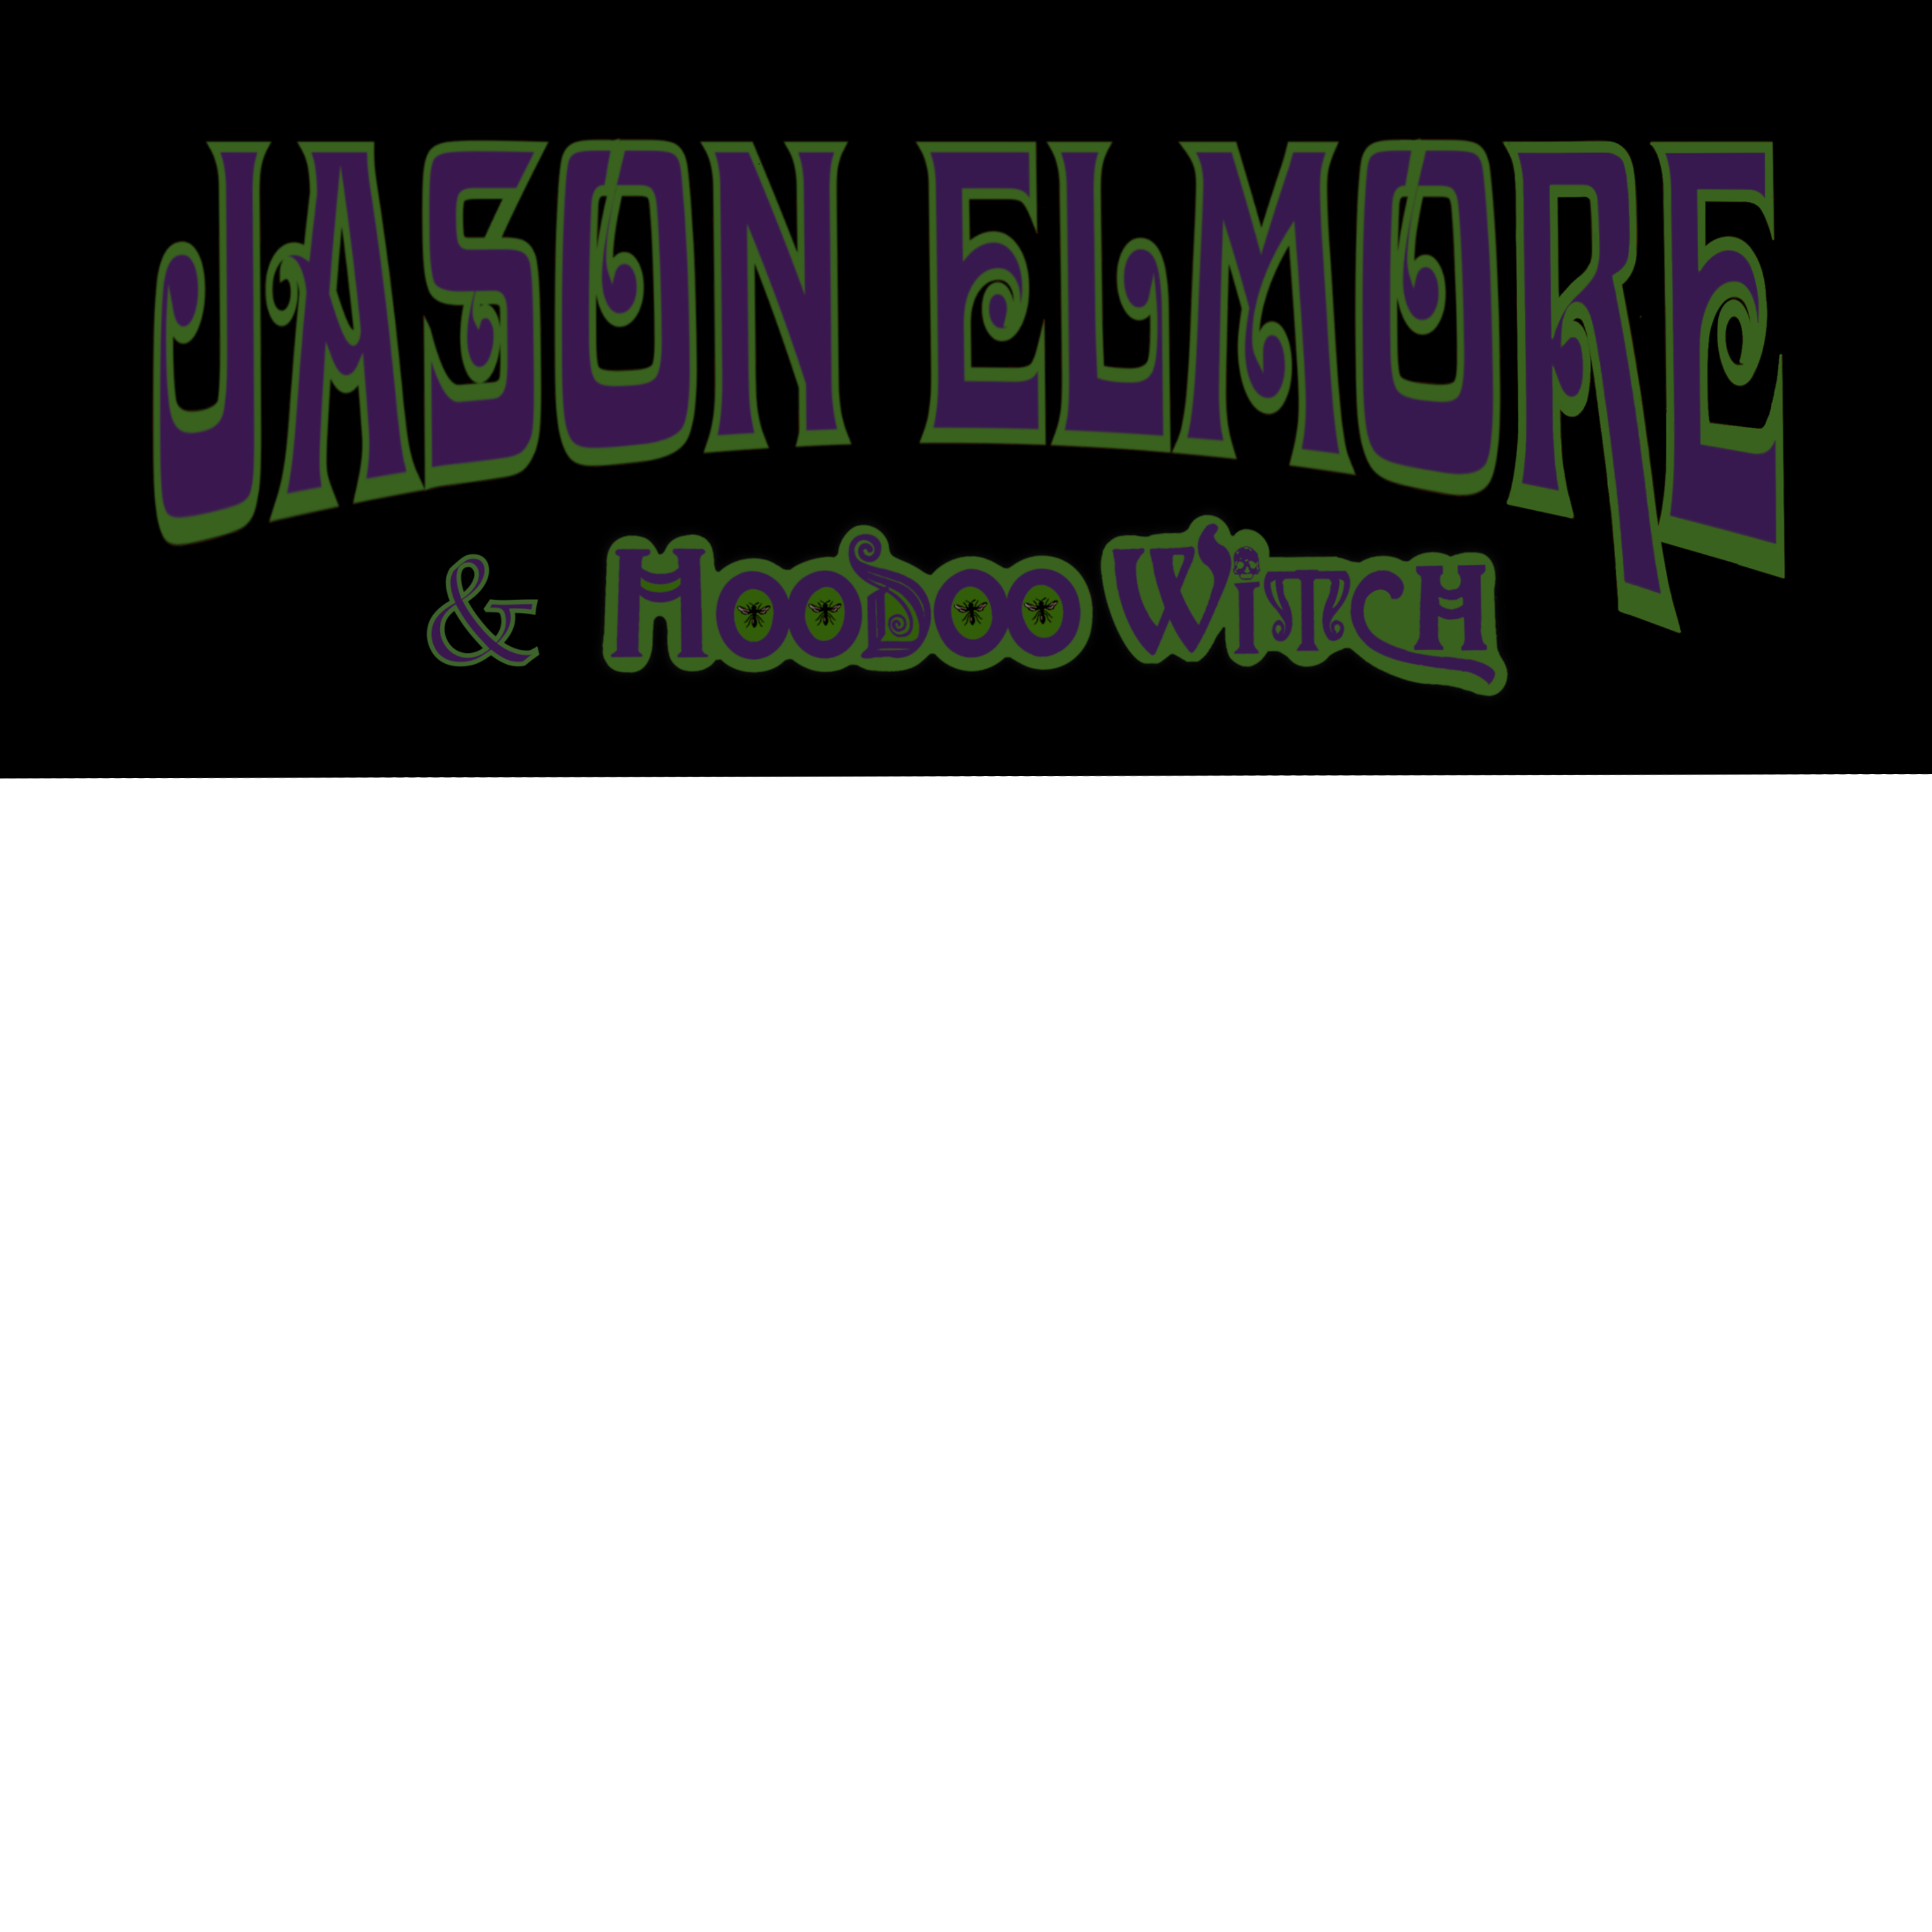 Jason Elmore